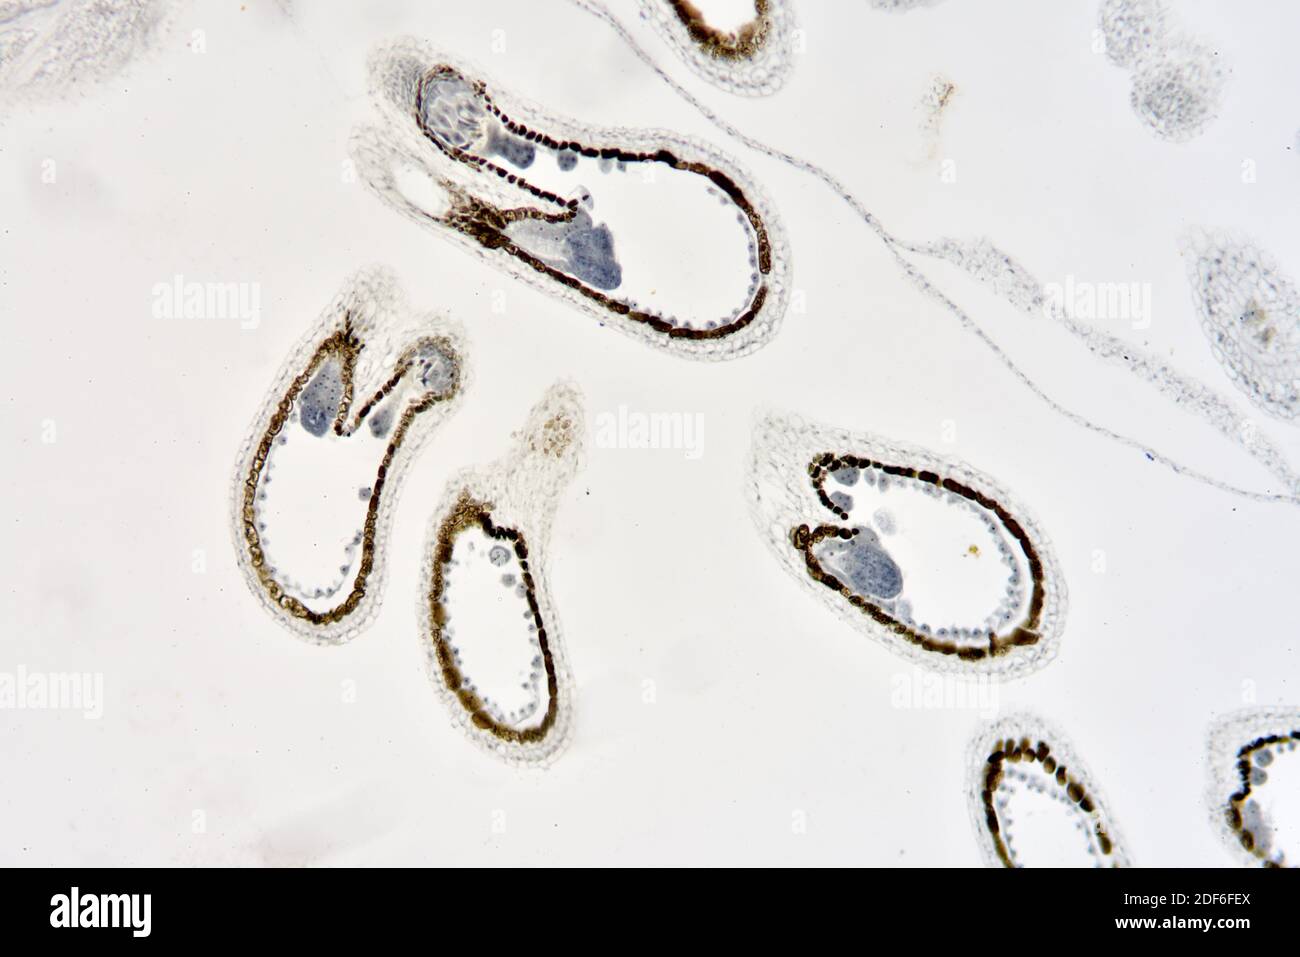 Embryon de berger (Capsella bursa-pastoris). Microscope optique X40. Banque D'Images